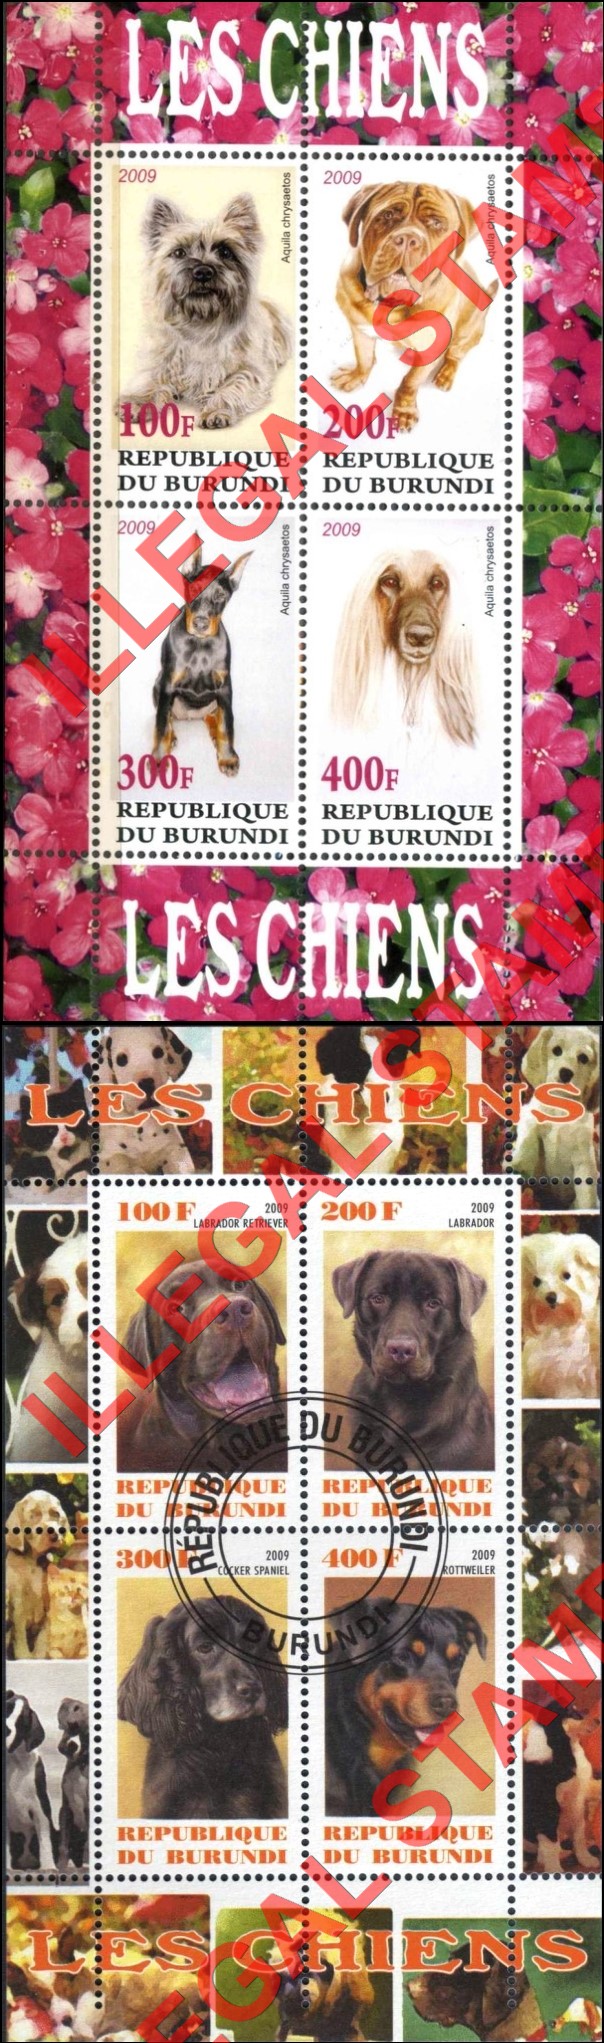 Burundi 2009 Dogs Counterfeit Illegal Stamp Souvenir Sheets of 4 (Part 1)